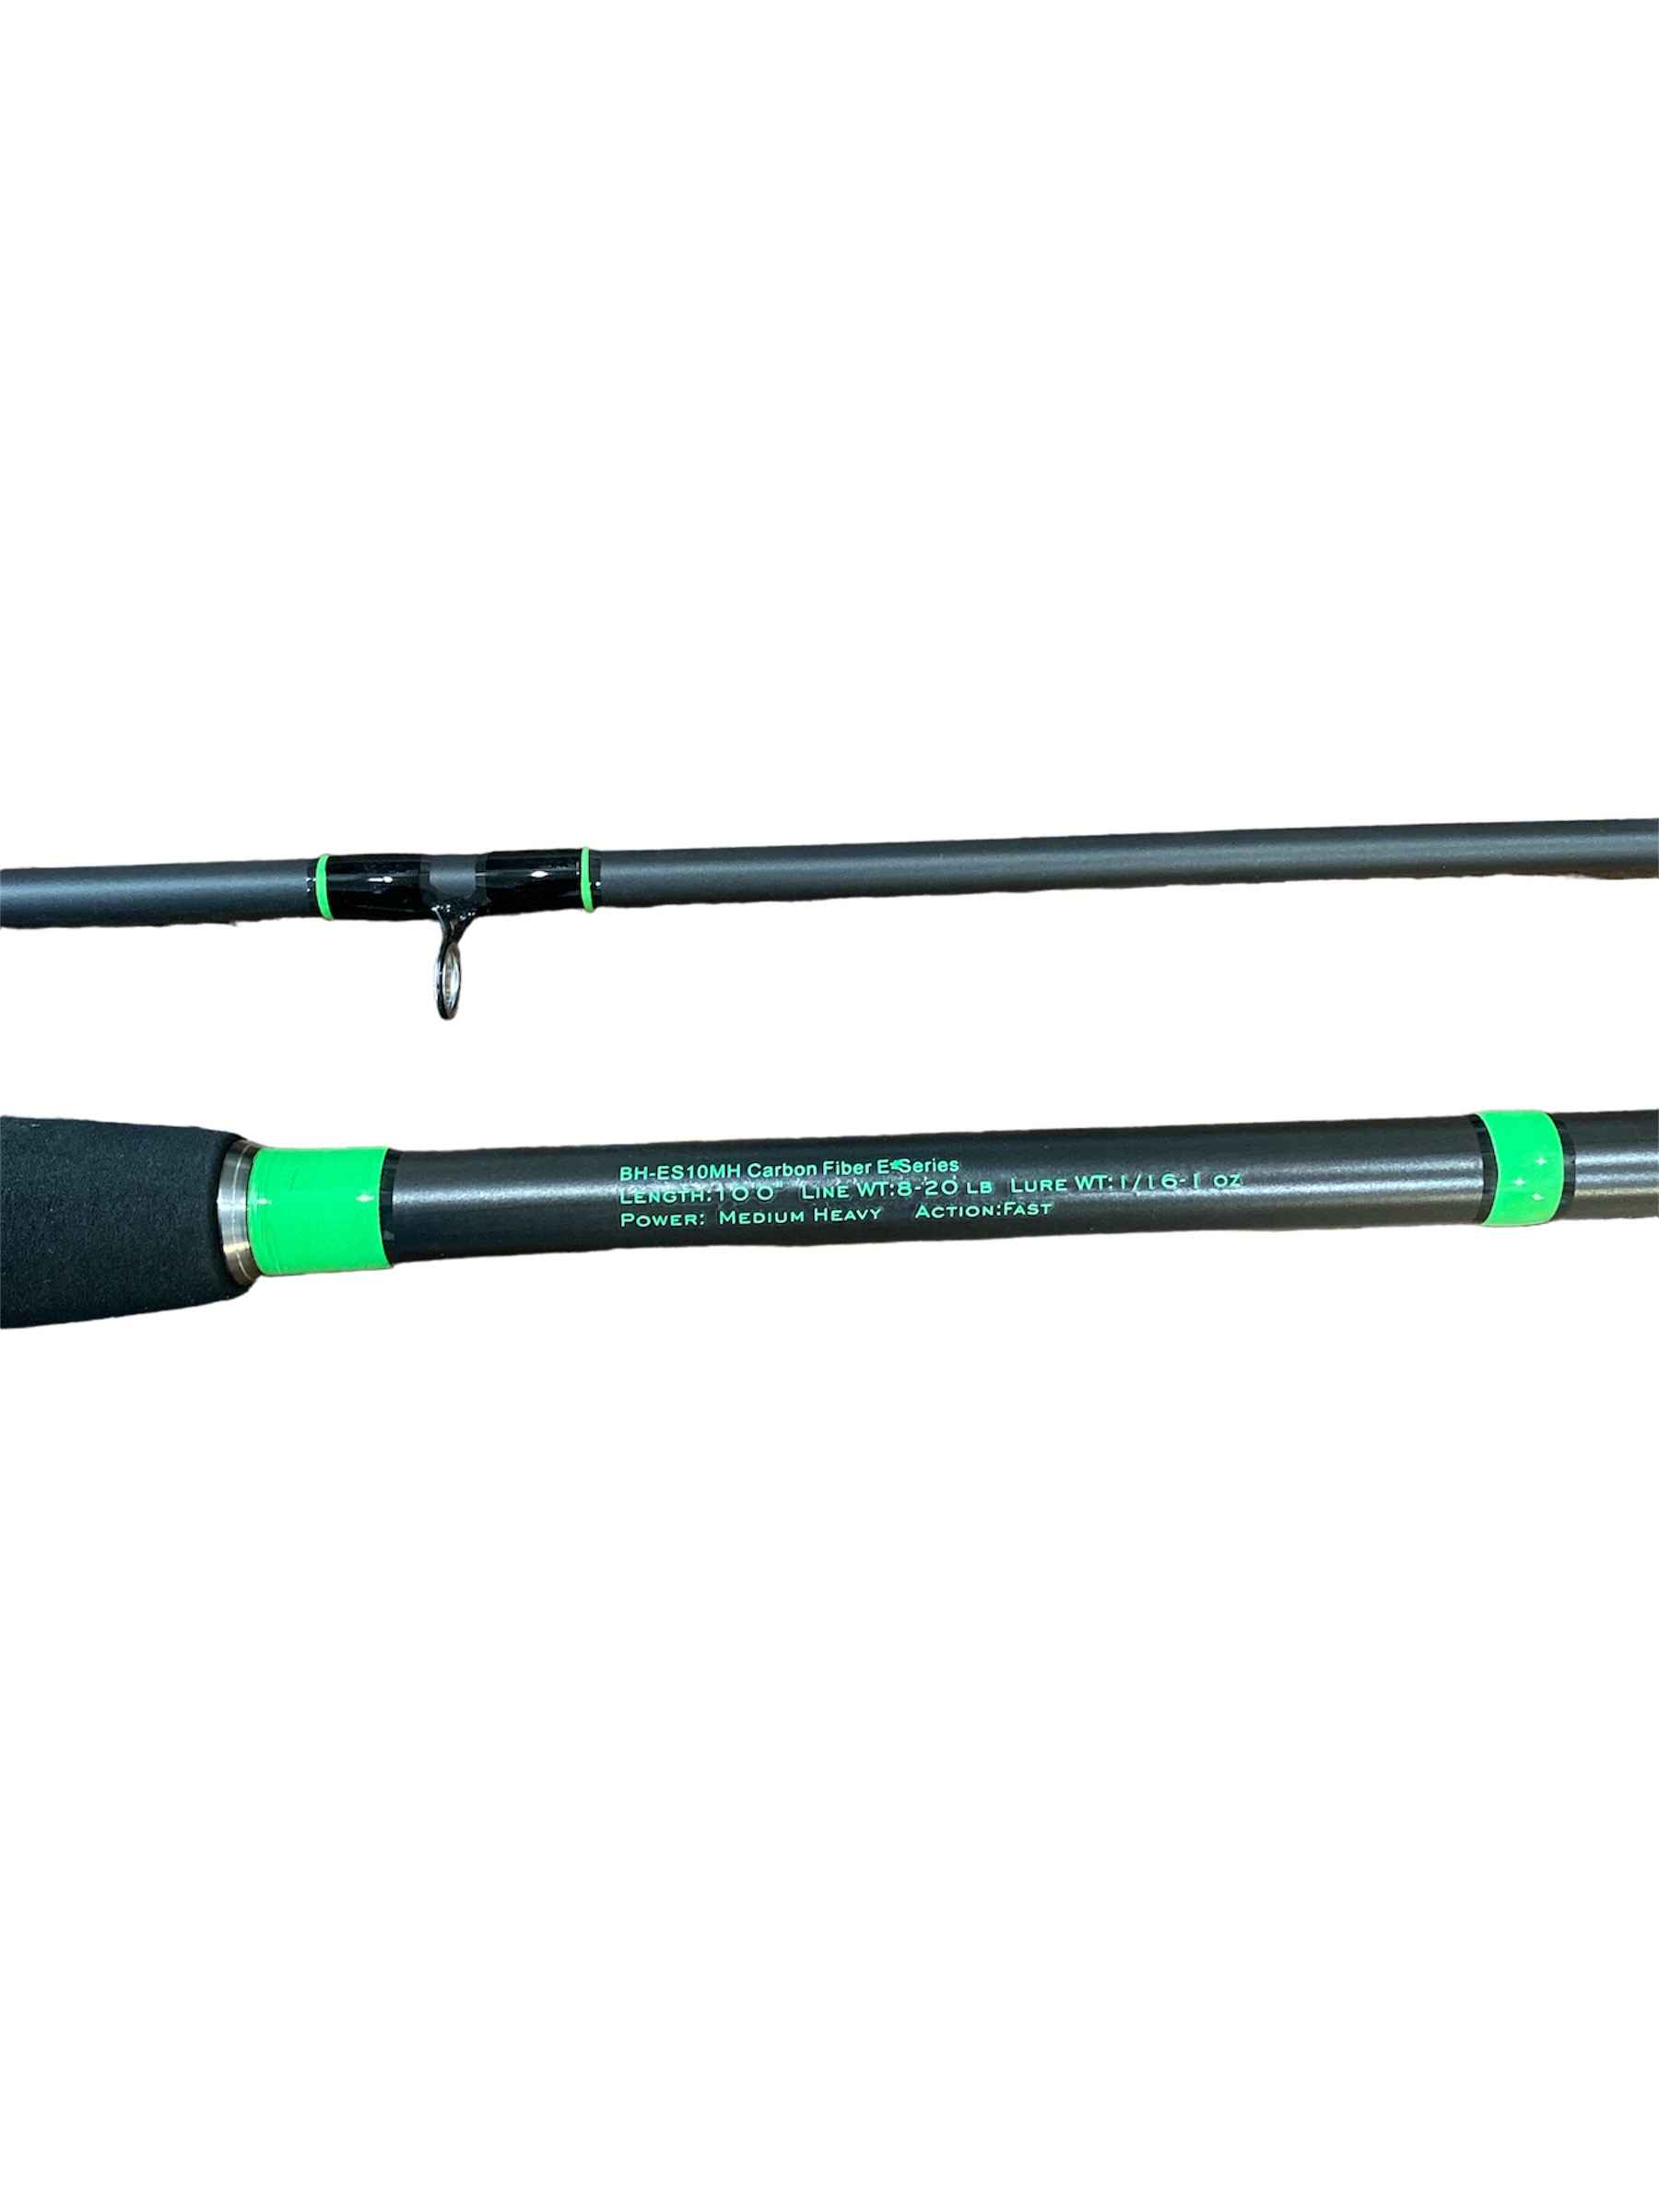 10’ E-Series Carbon Fiber Rod